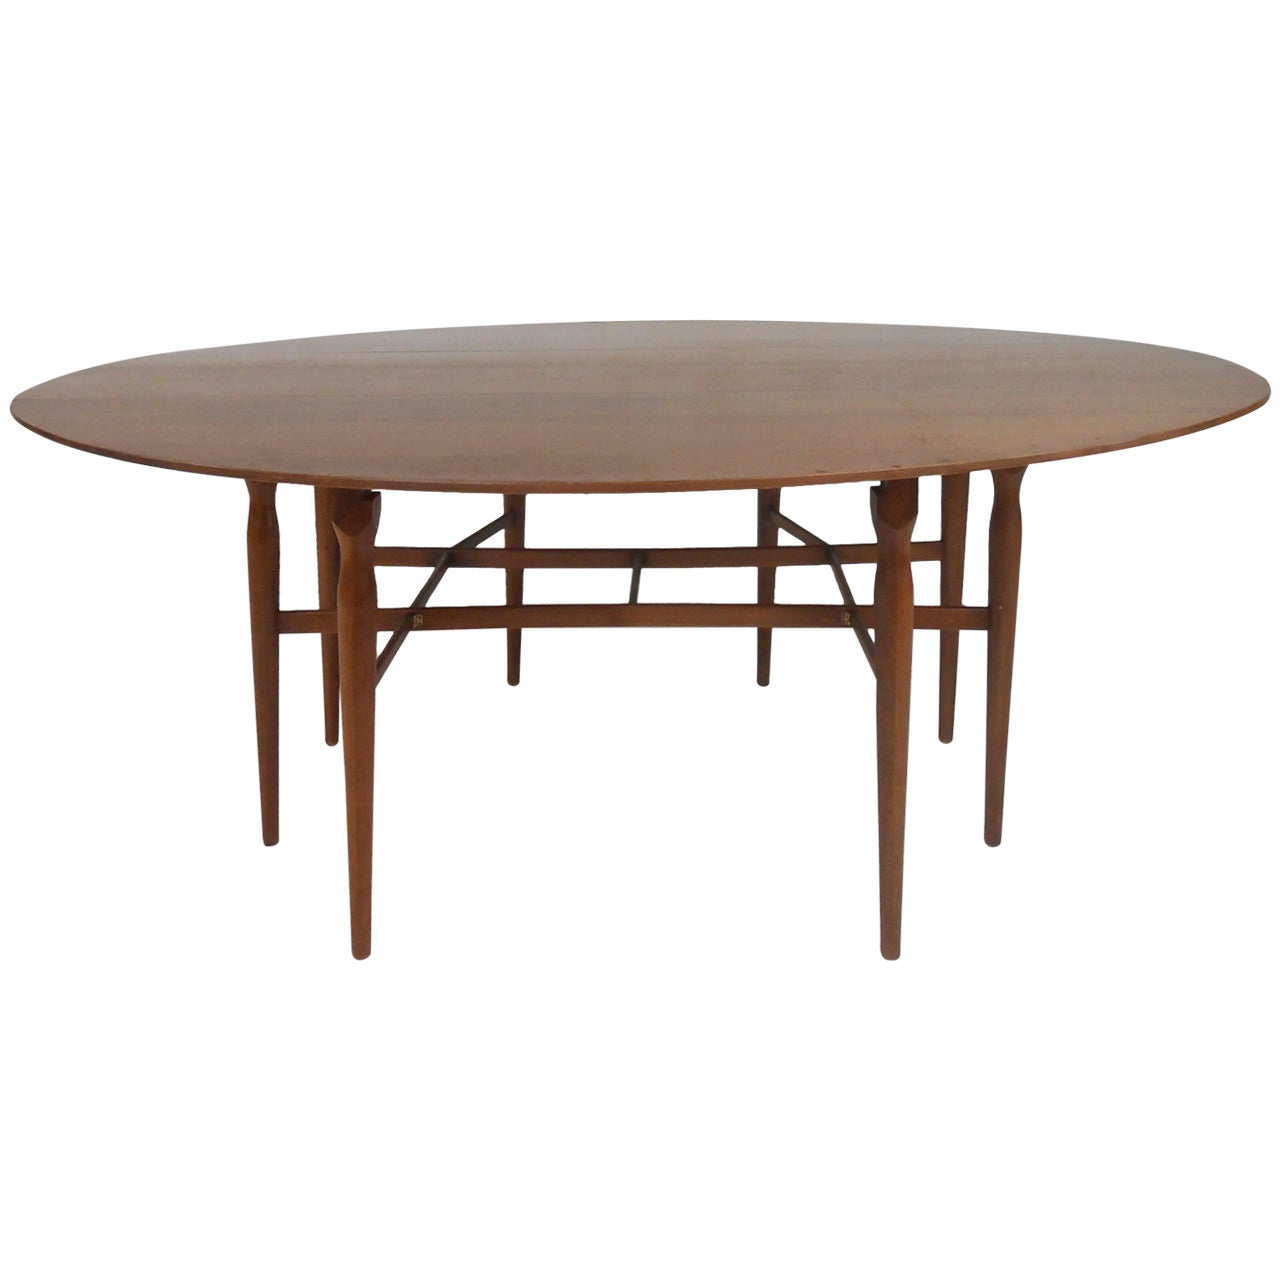 Edward Wormley Style Oval, Drop-Leaf Table